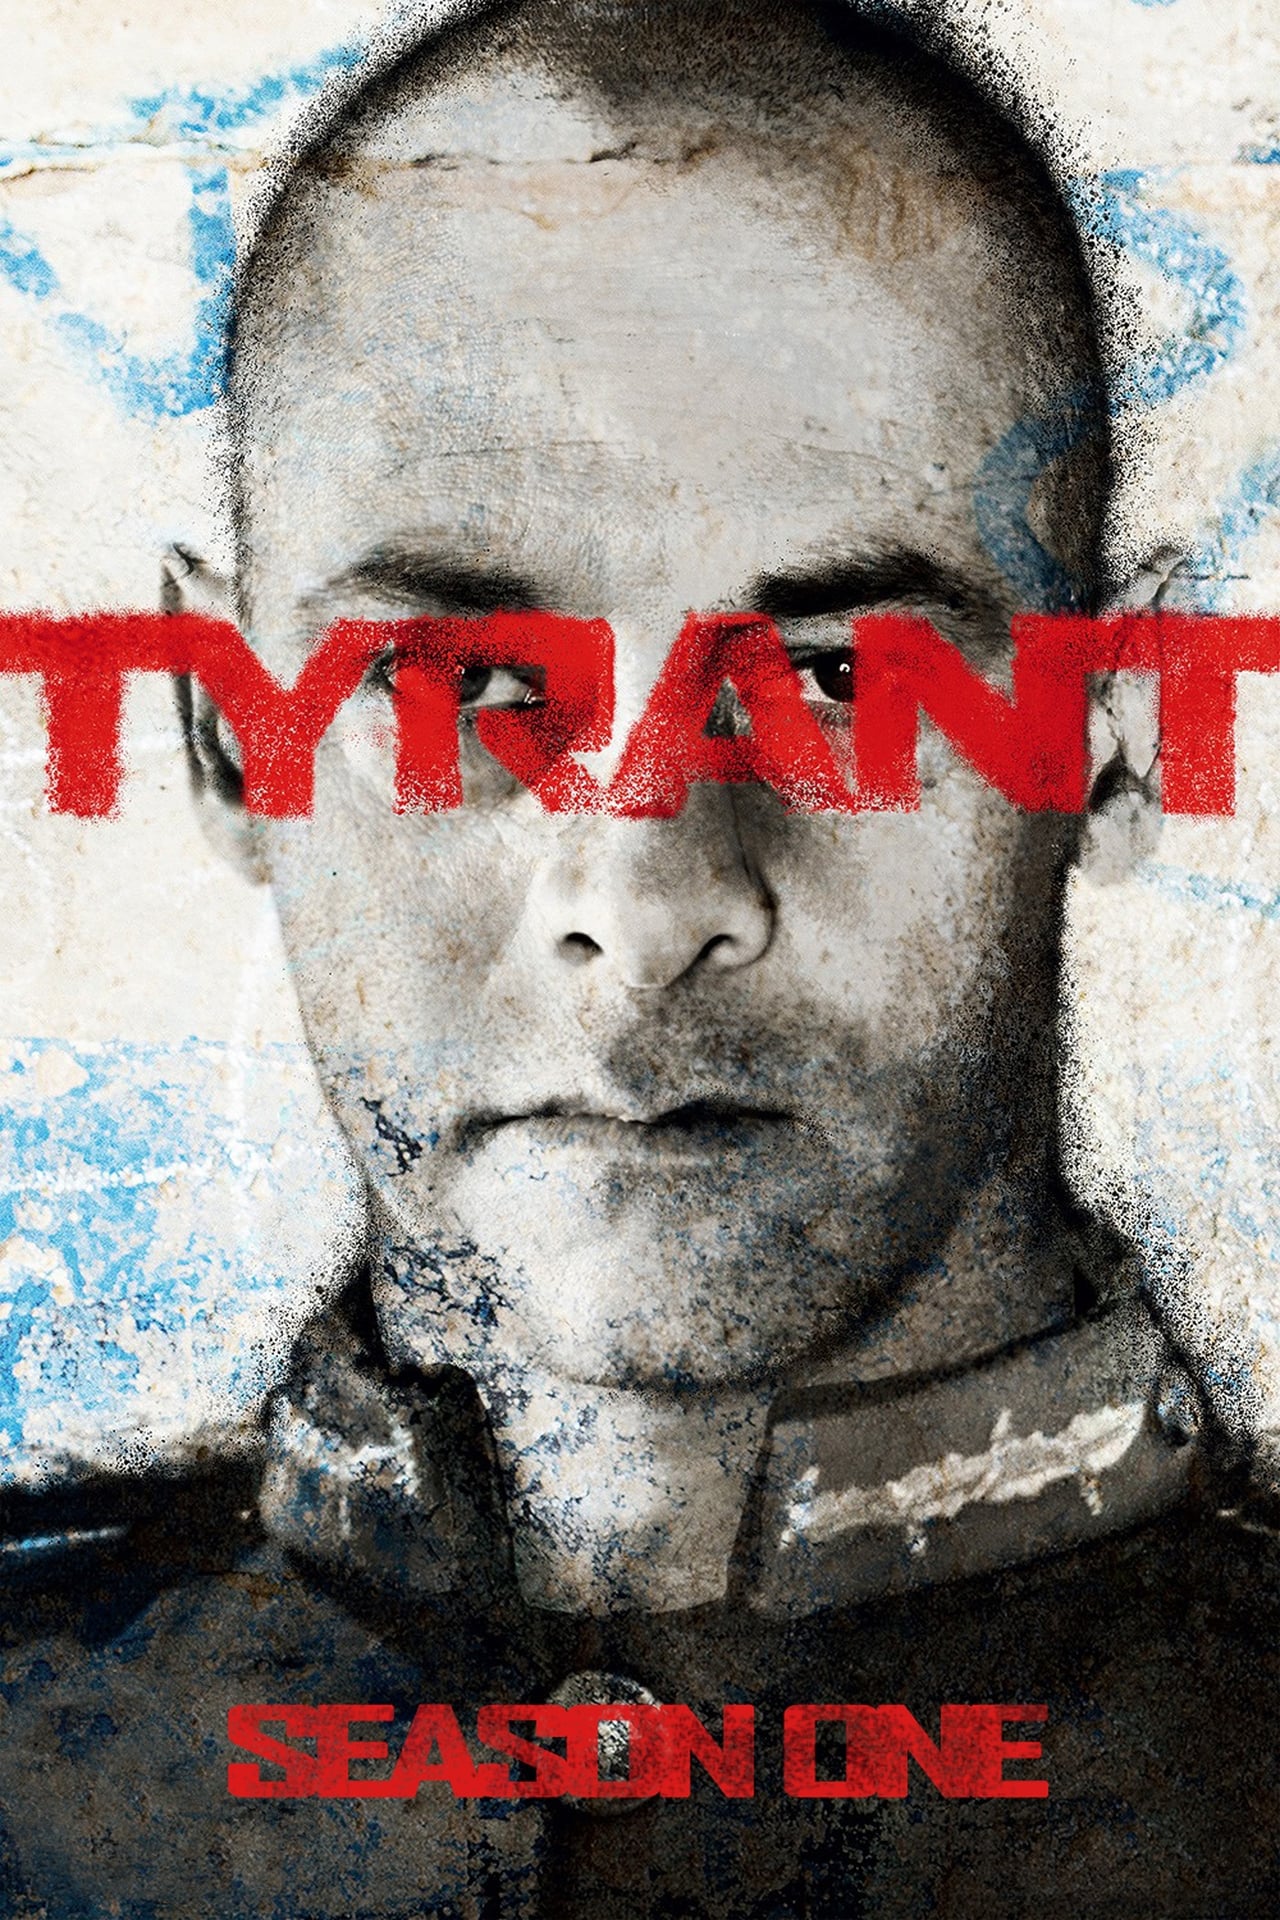 Tyrant Season 1